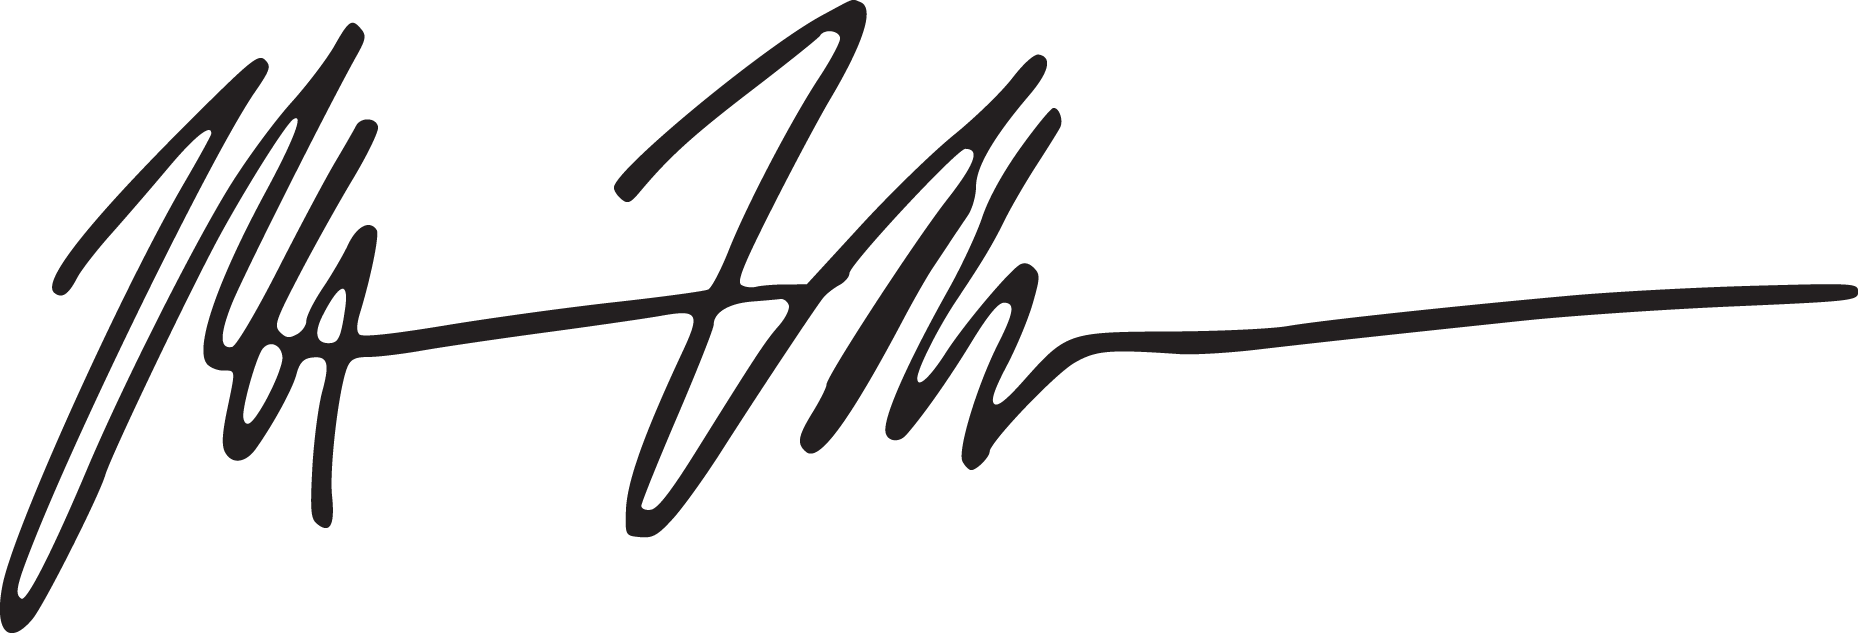 Matt Miller signature